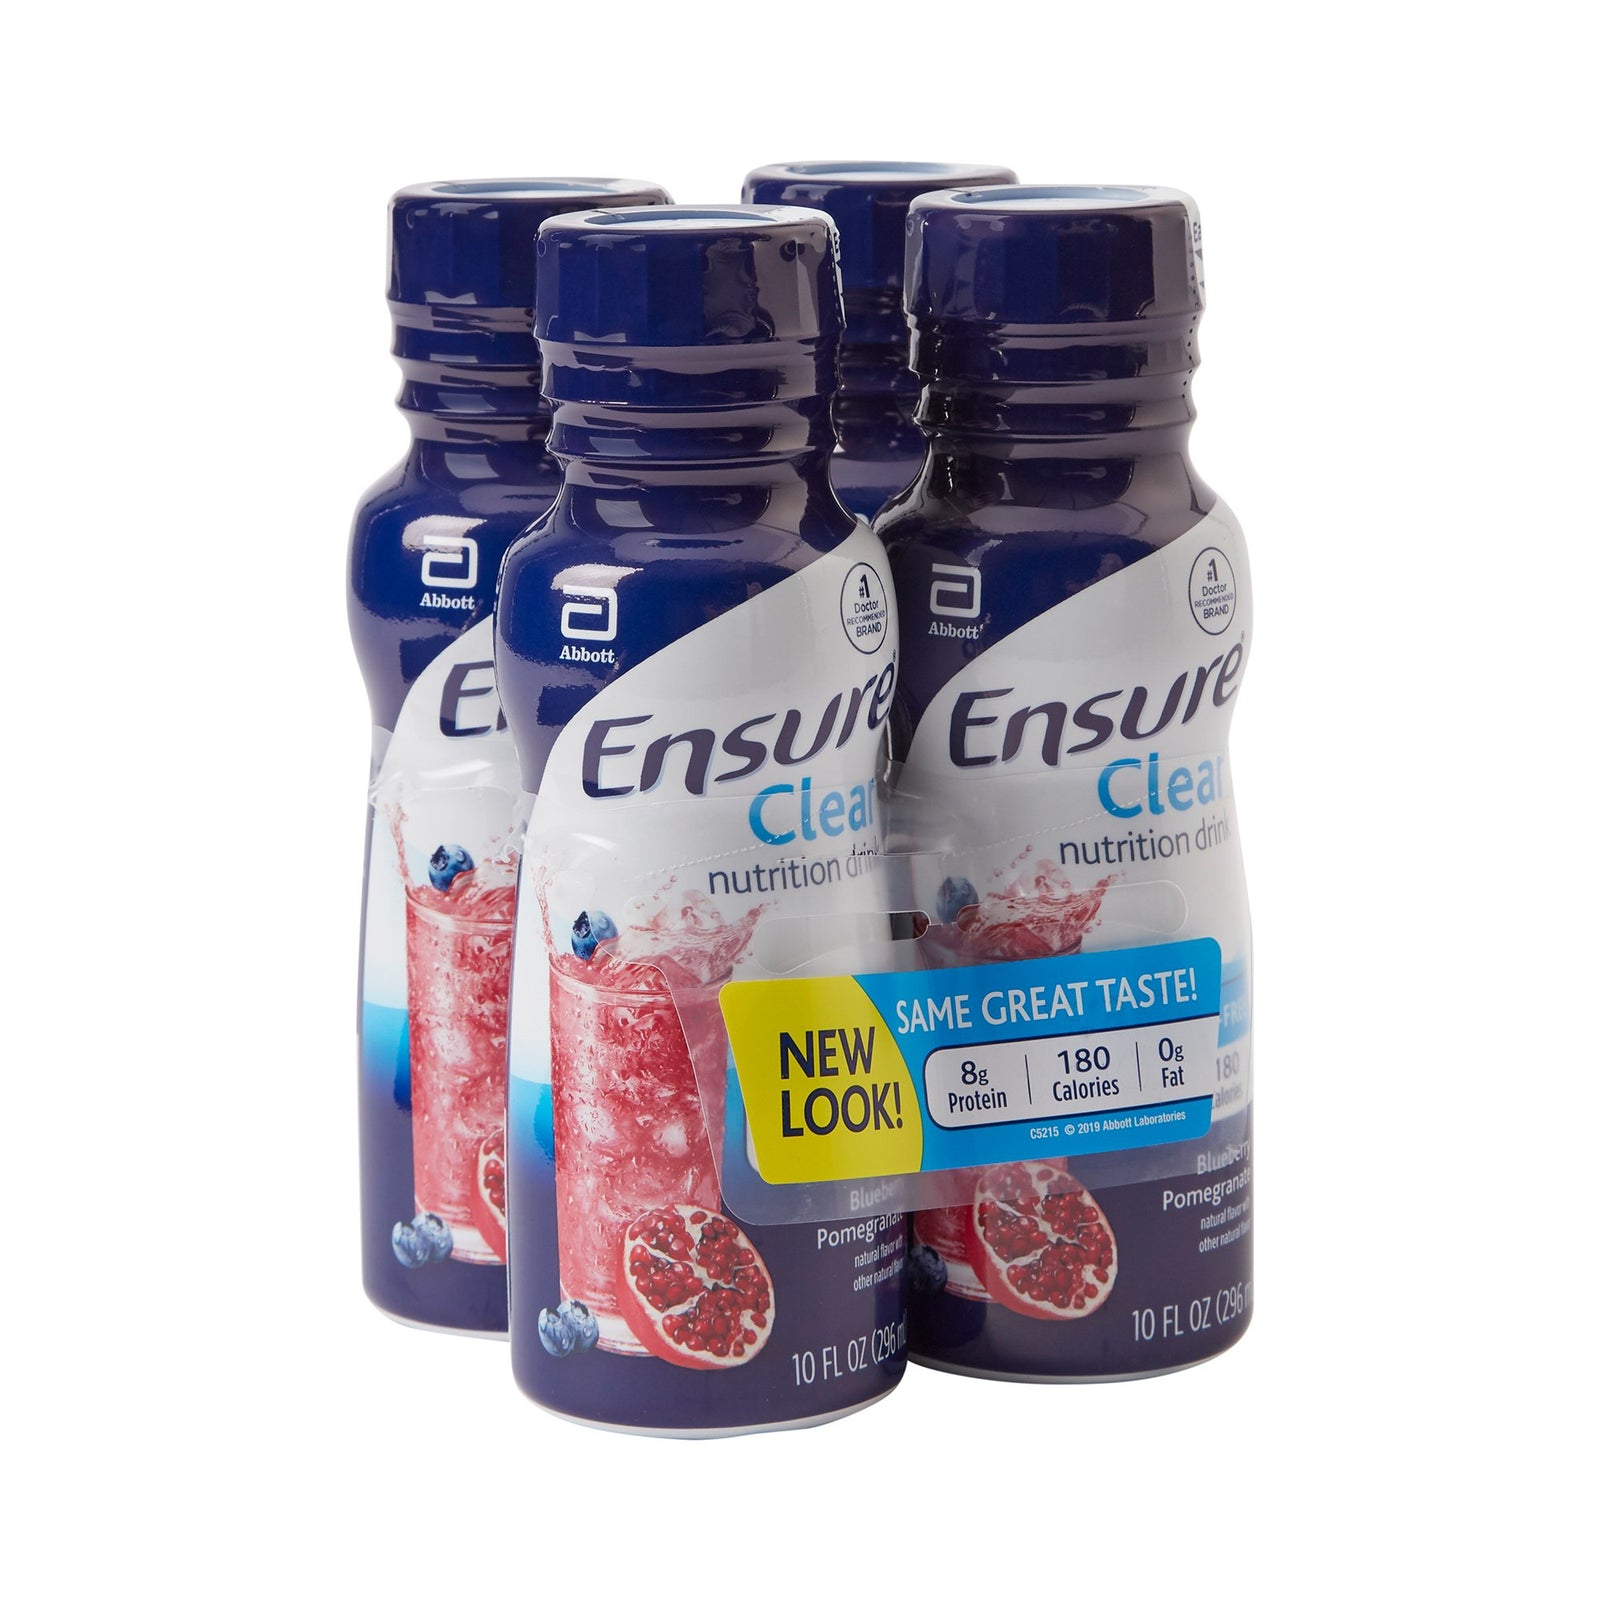 Ensure Clear Nutrition Drink, Blueberry Pomegranate - 4 pack, 10 fl oz bottles